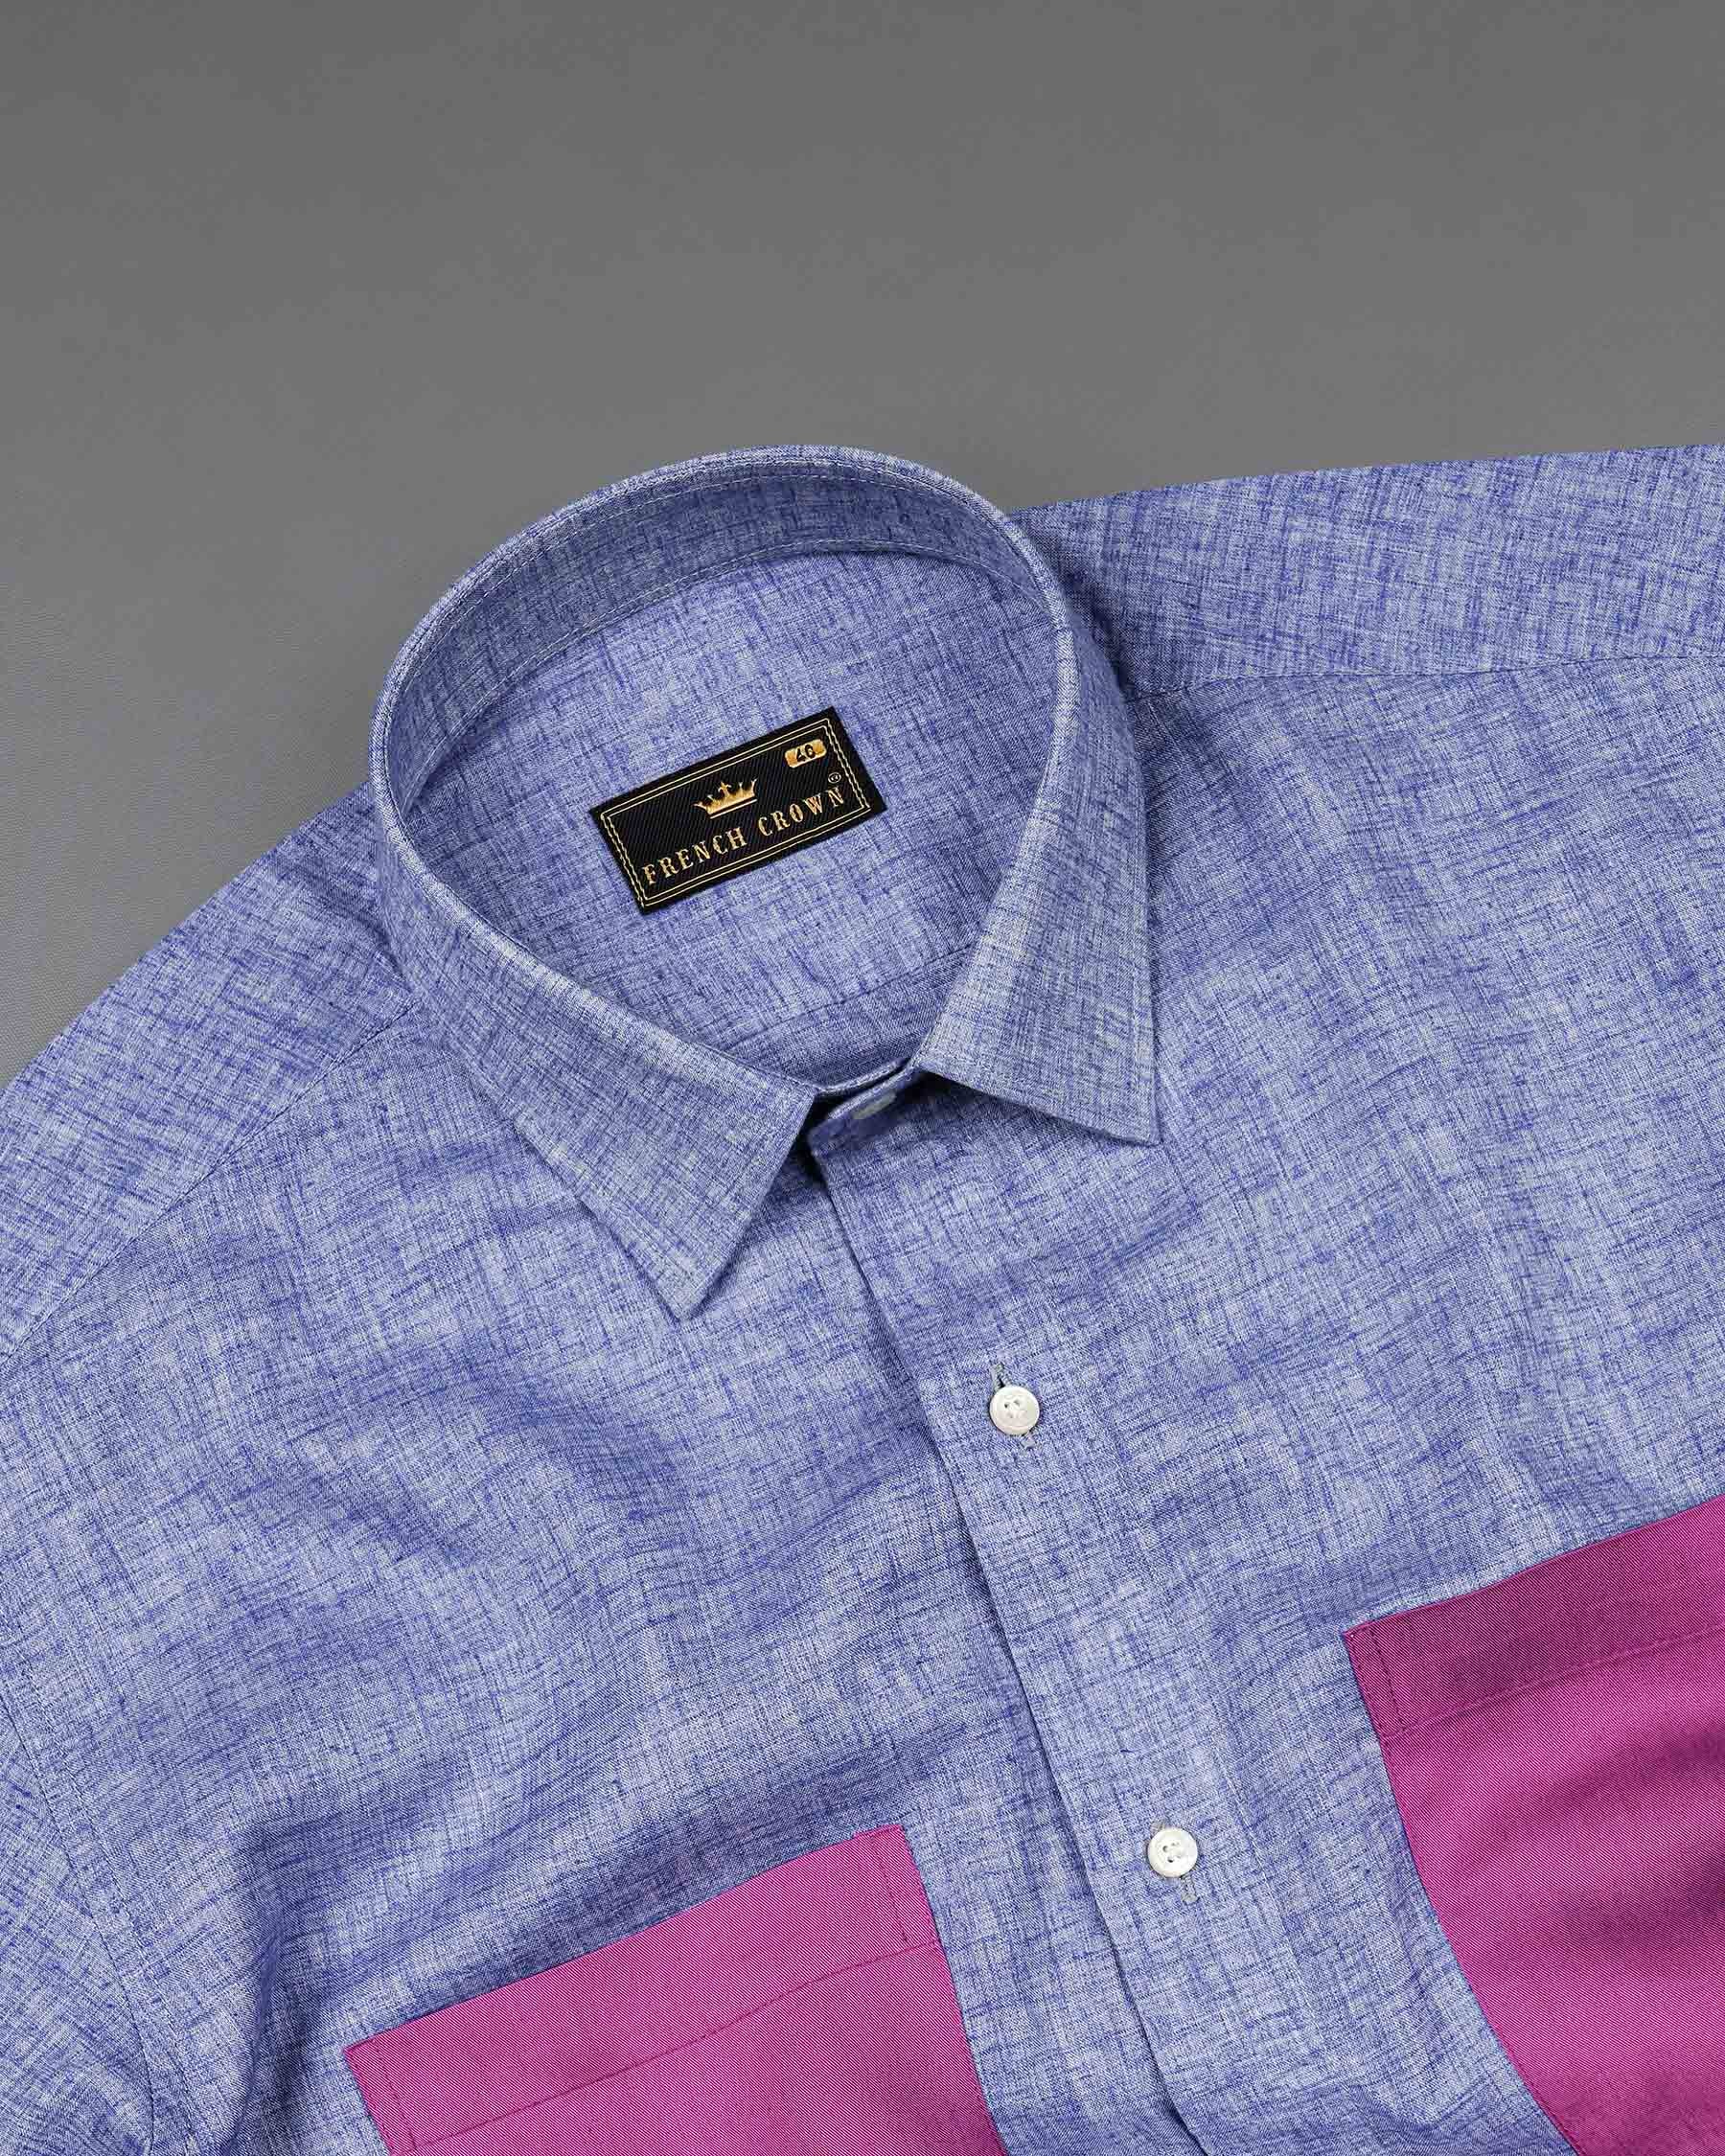 Chetwode Blue With Purple Two Side Pocket Chambray Premium Cotton Designer Shirt 7946-P196-38, 7946-P196-H-38, 7946-P196-39, 7946-P196-H-39, 7946-P196-40, 7946-P196-H-40, 7946-P196-42, 7946-P196-H-42, 7946-P196-44, 7946-P196-H-44, 7946-P196-46, 7946-P196-H-46, 7946-P196-48, 7946-P196-H-48, 7946-P196-50, 7946-P196-H-50, 7946-P196-52, 7946-P196-H-52